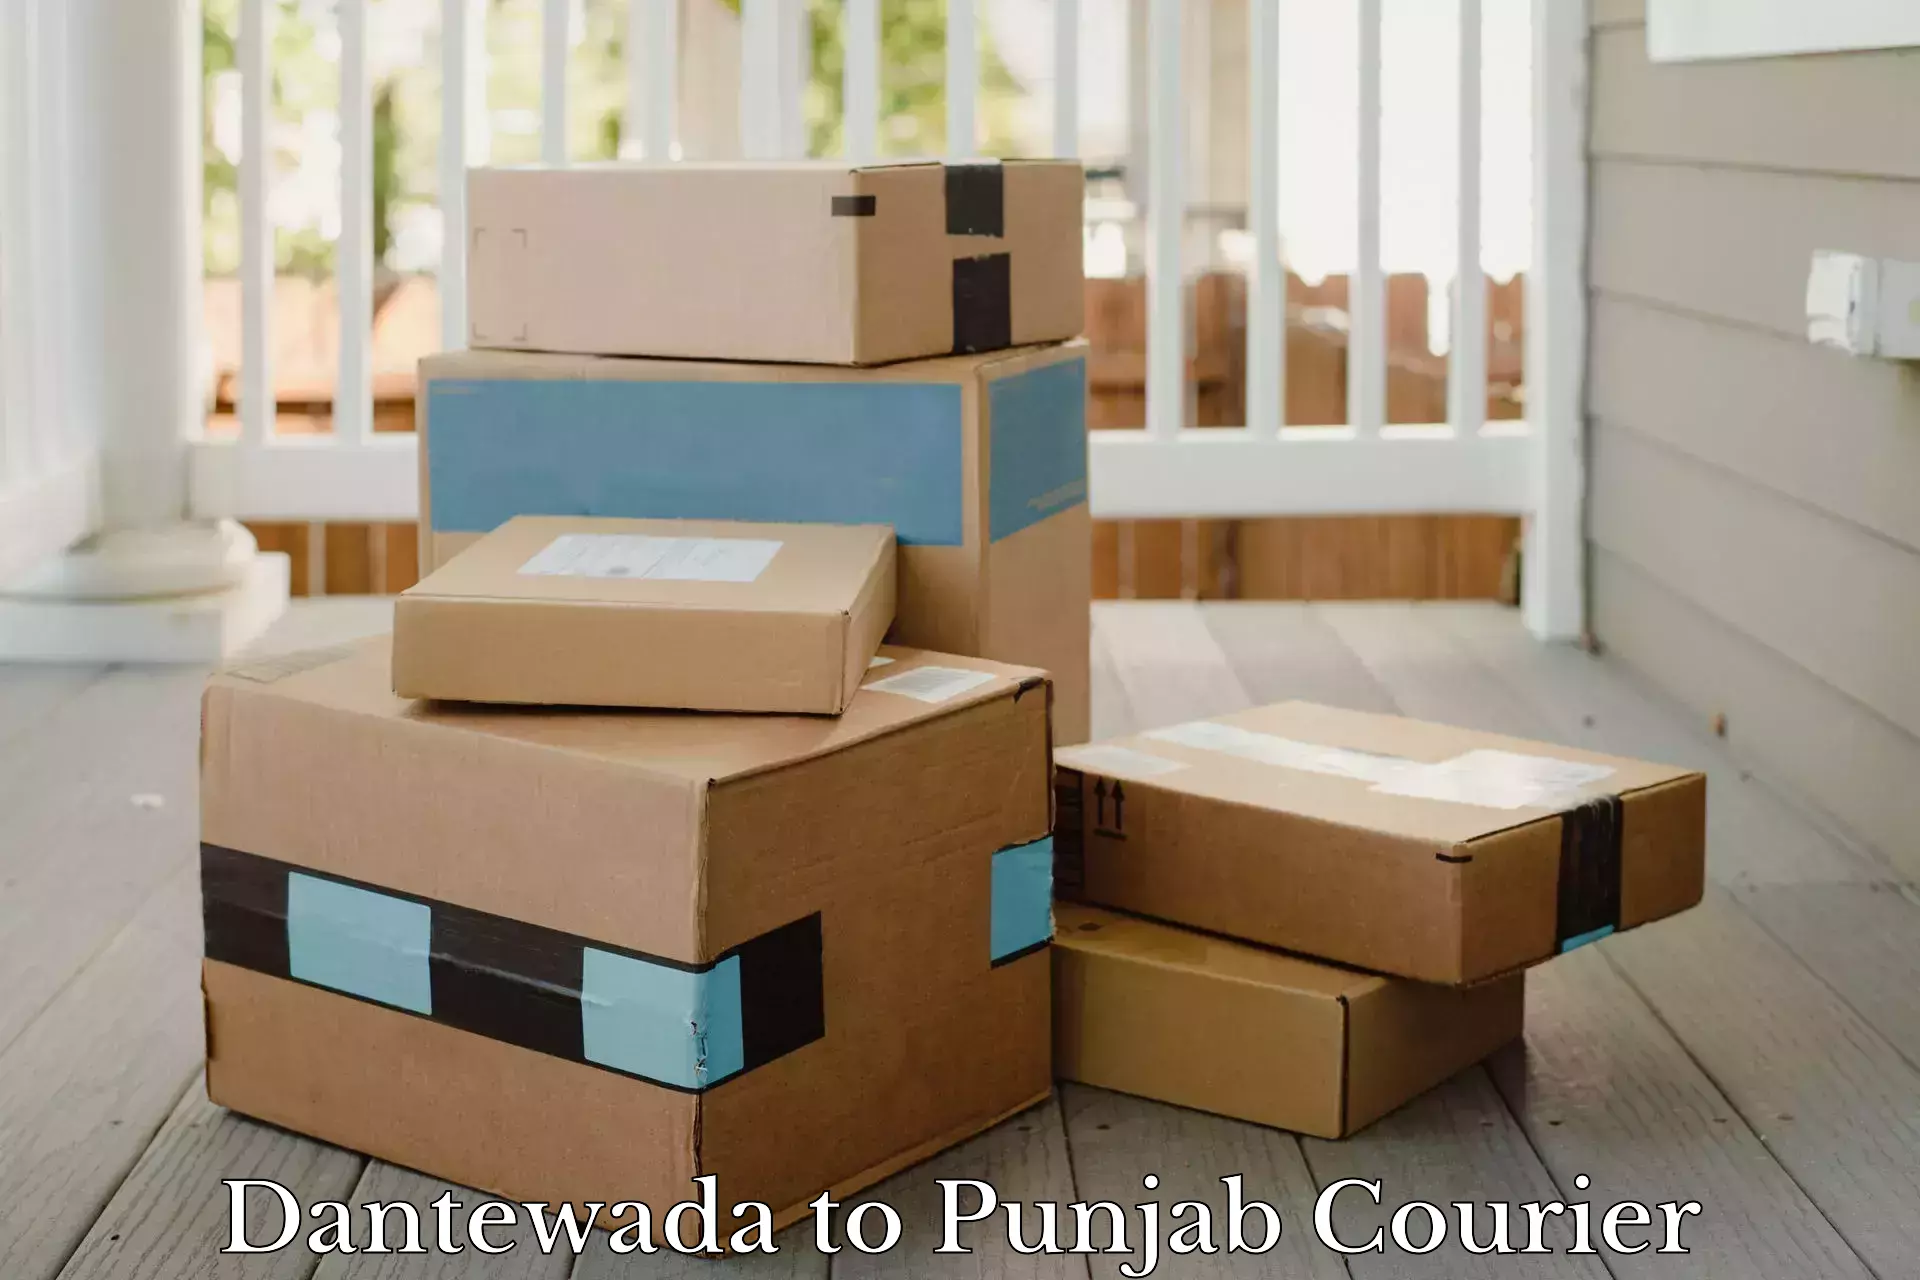 User-friendly delivery service Dantewada to Anandpur Sahib